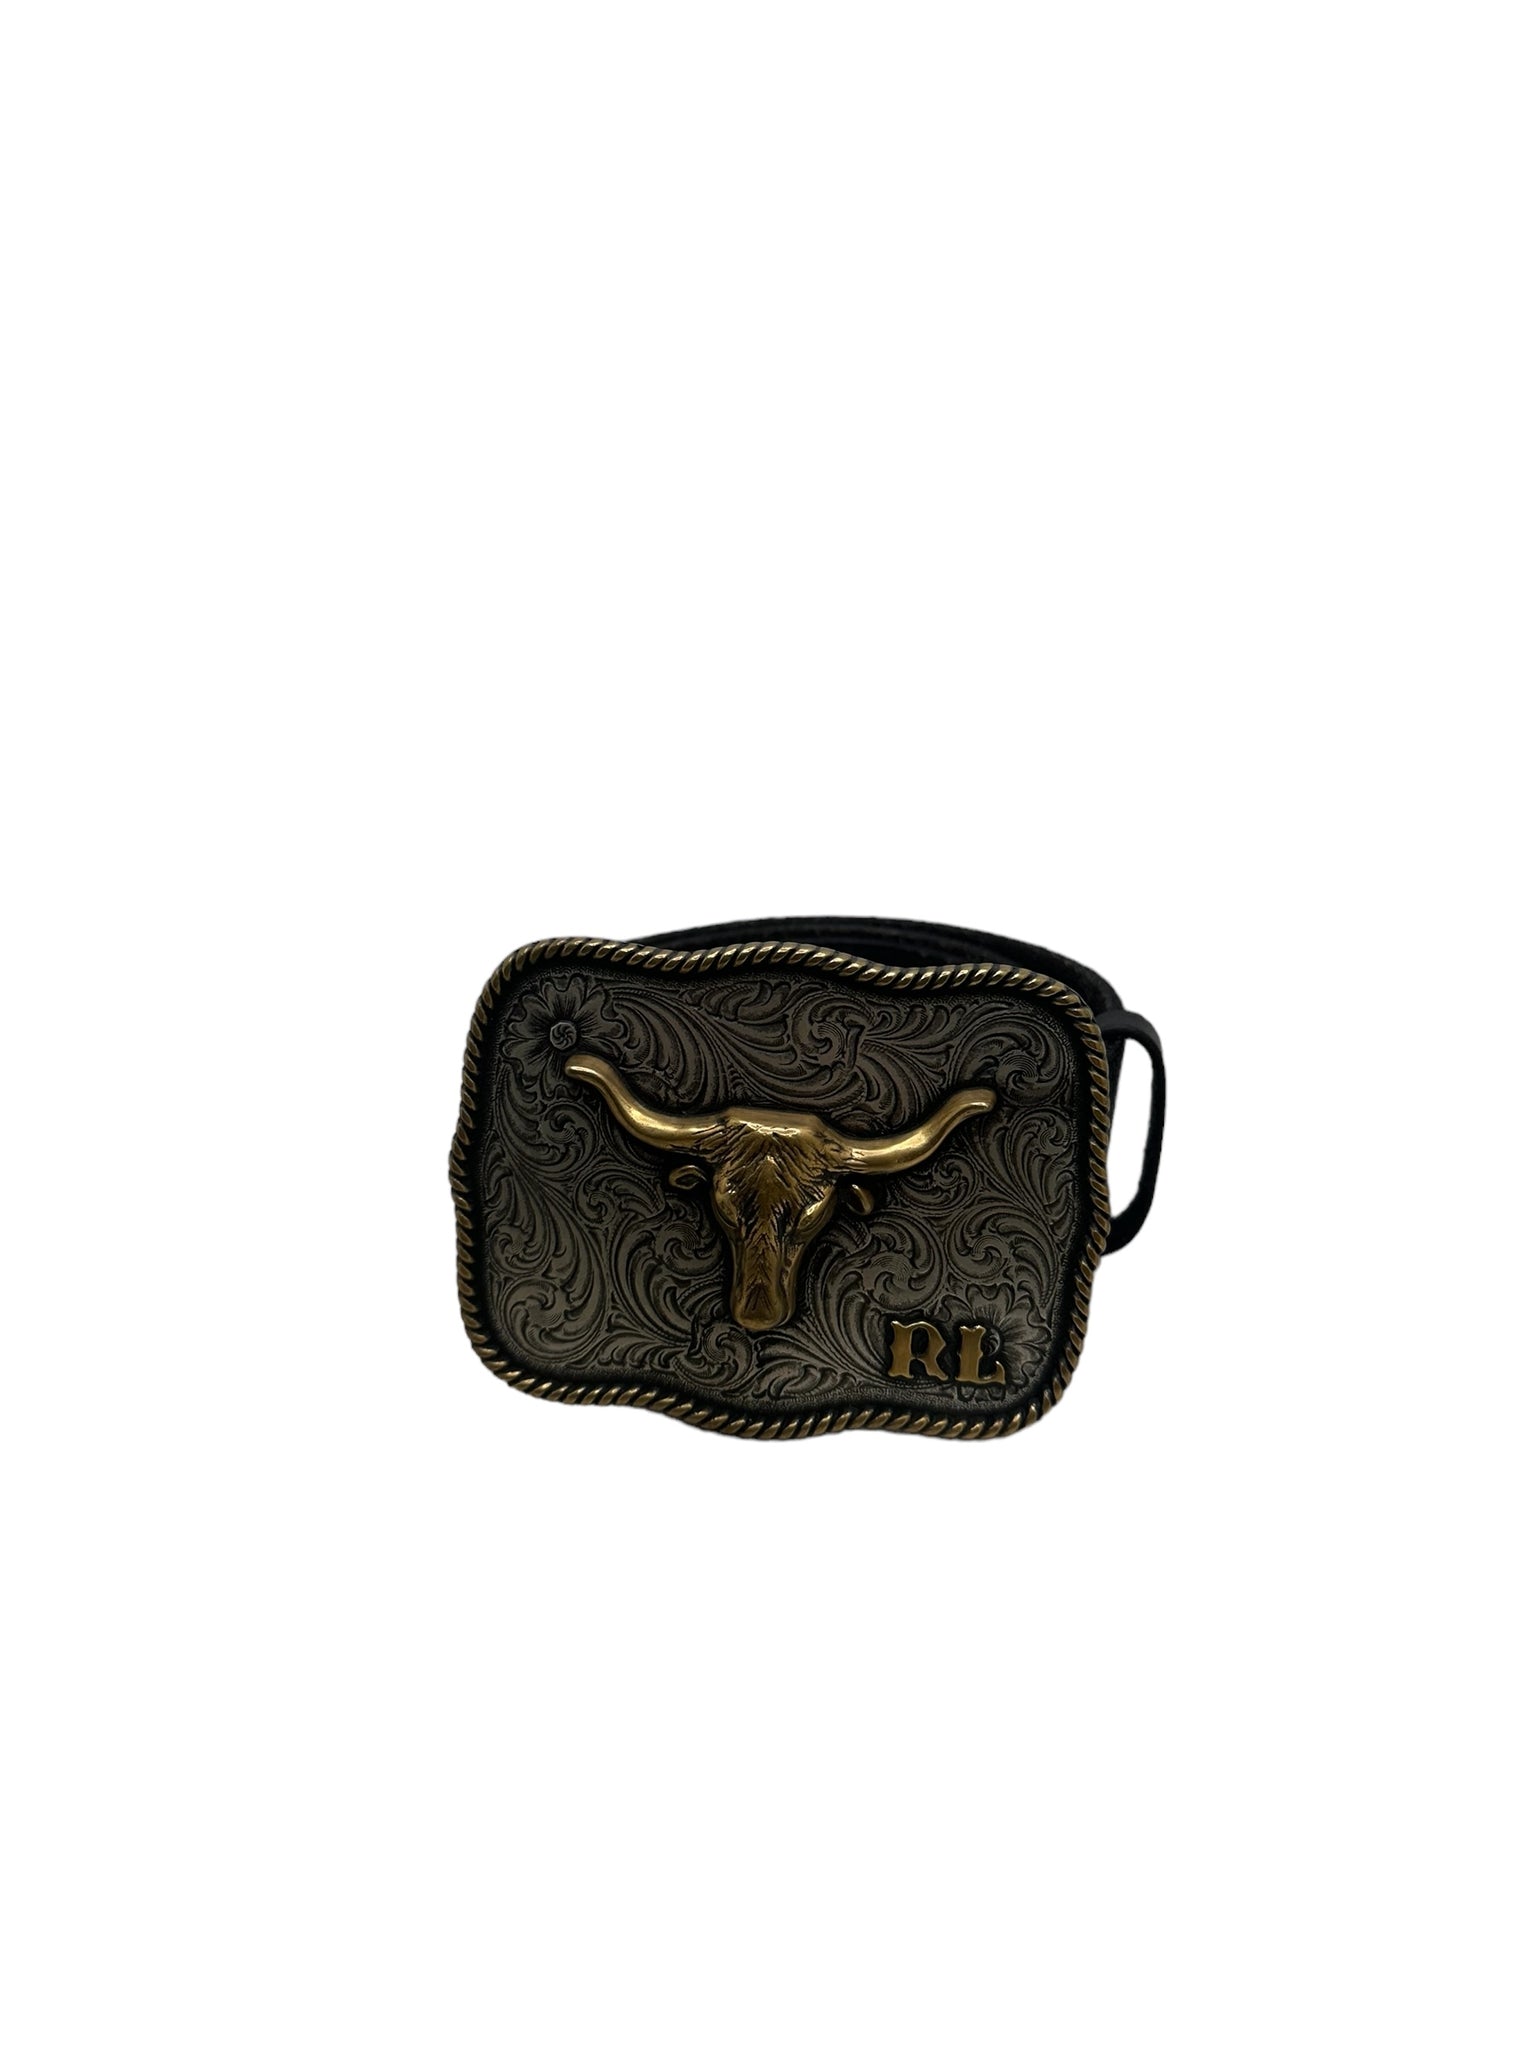 Polo Ralph Lauren Brown Leather Western Longhorn Bull Head Belt Buckle 32 VTG